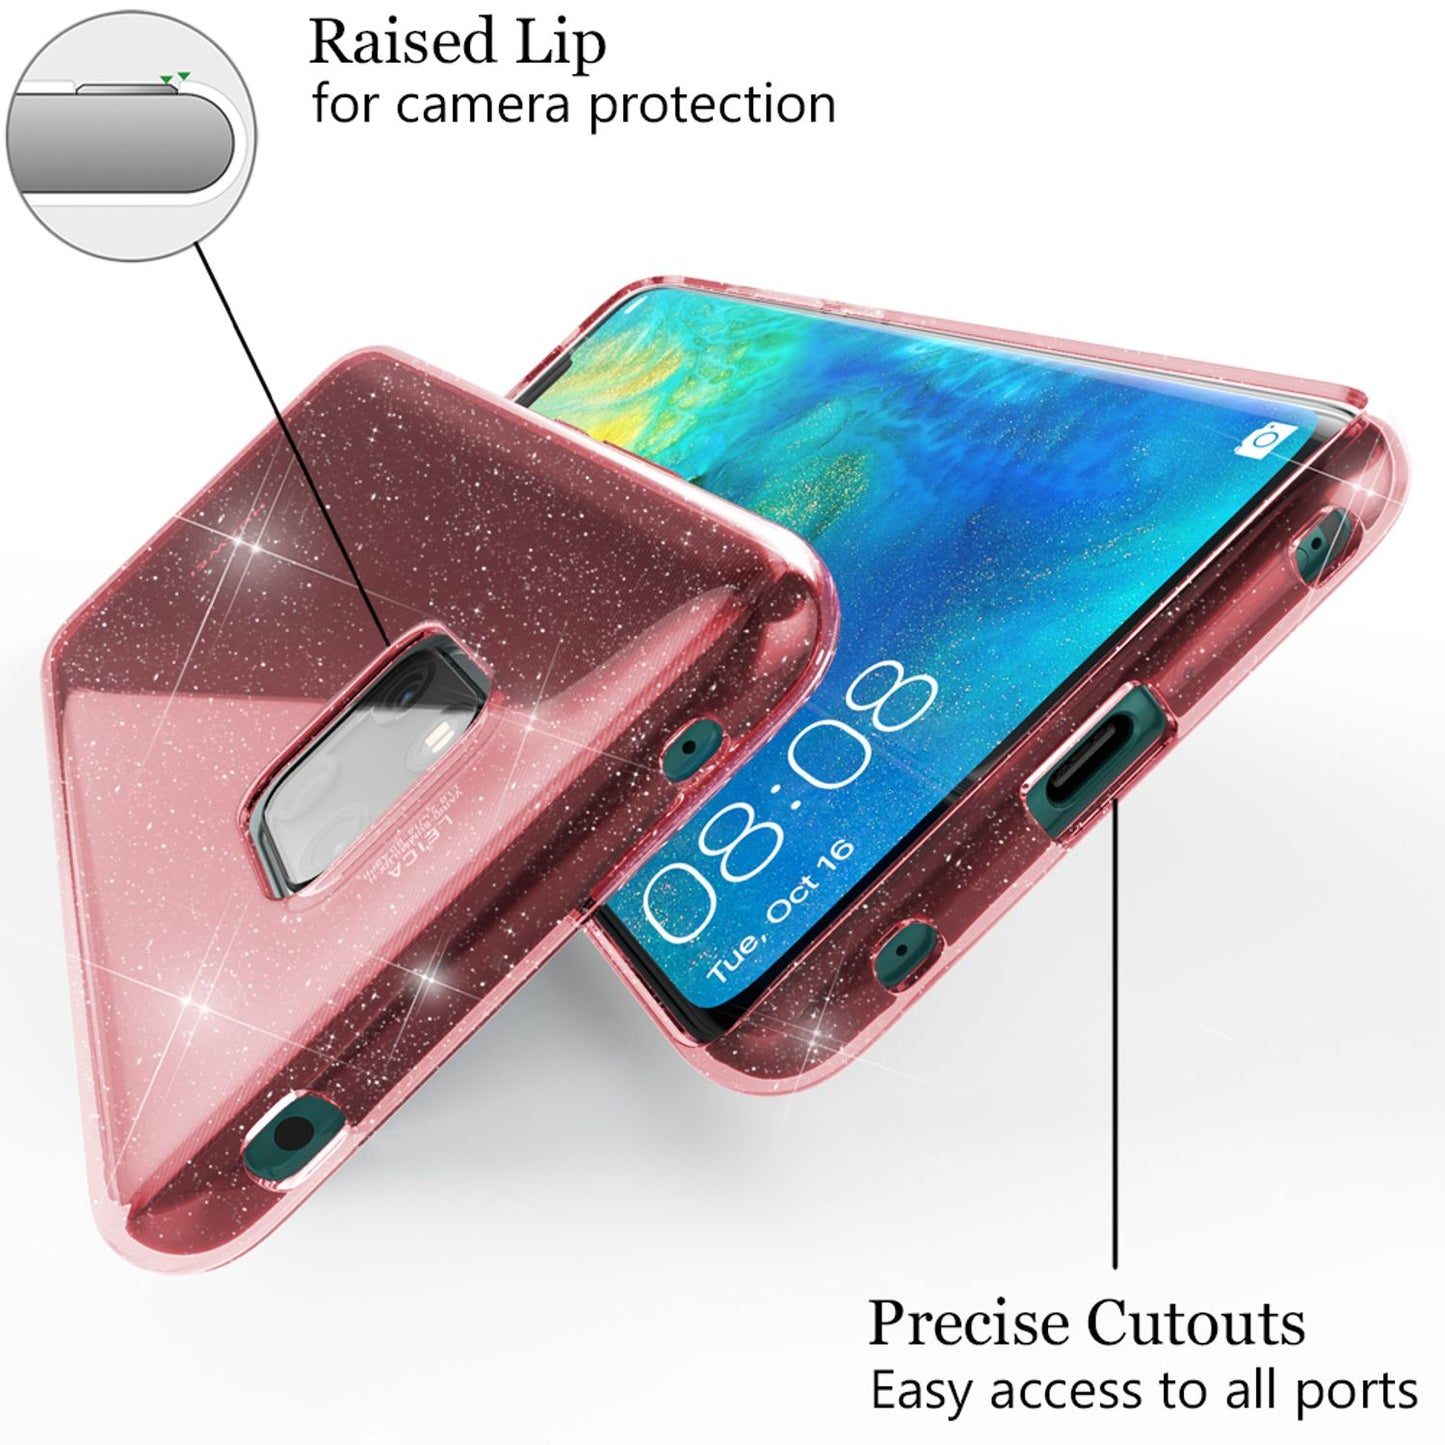 NALIA Glitter Hülle kompatibel mit Huawei Mate20 Pro, Glitzer Handyhülle Case